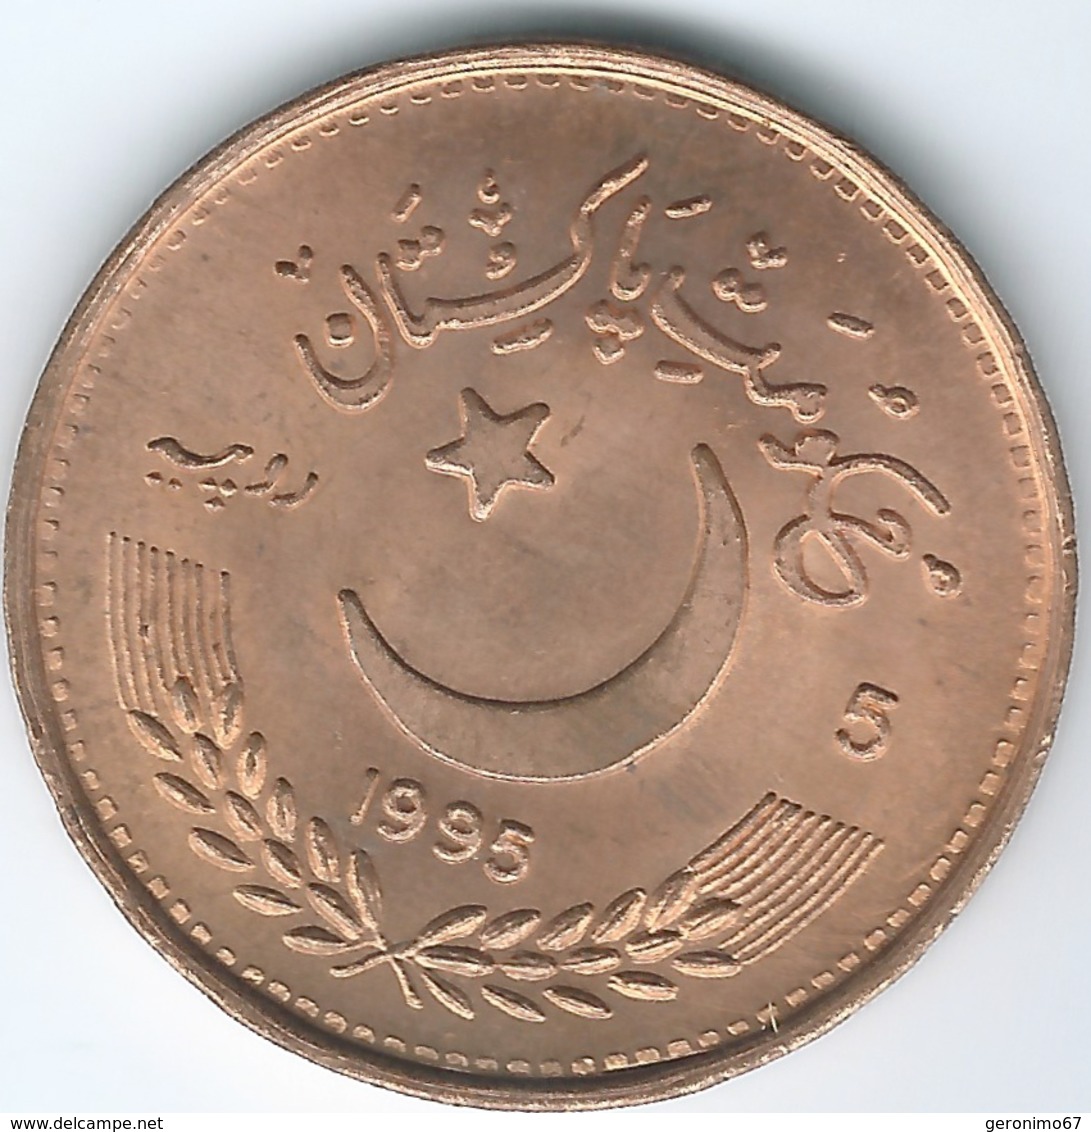 Pakistan - 1995 - 5 Rupees - 50th Anniversary Of The UN - KM59 - Pakistan